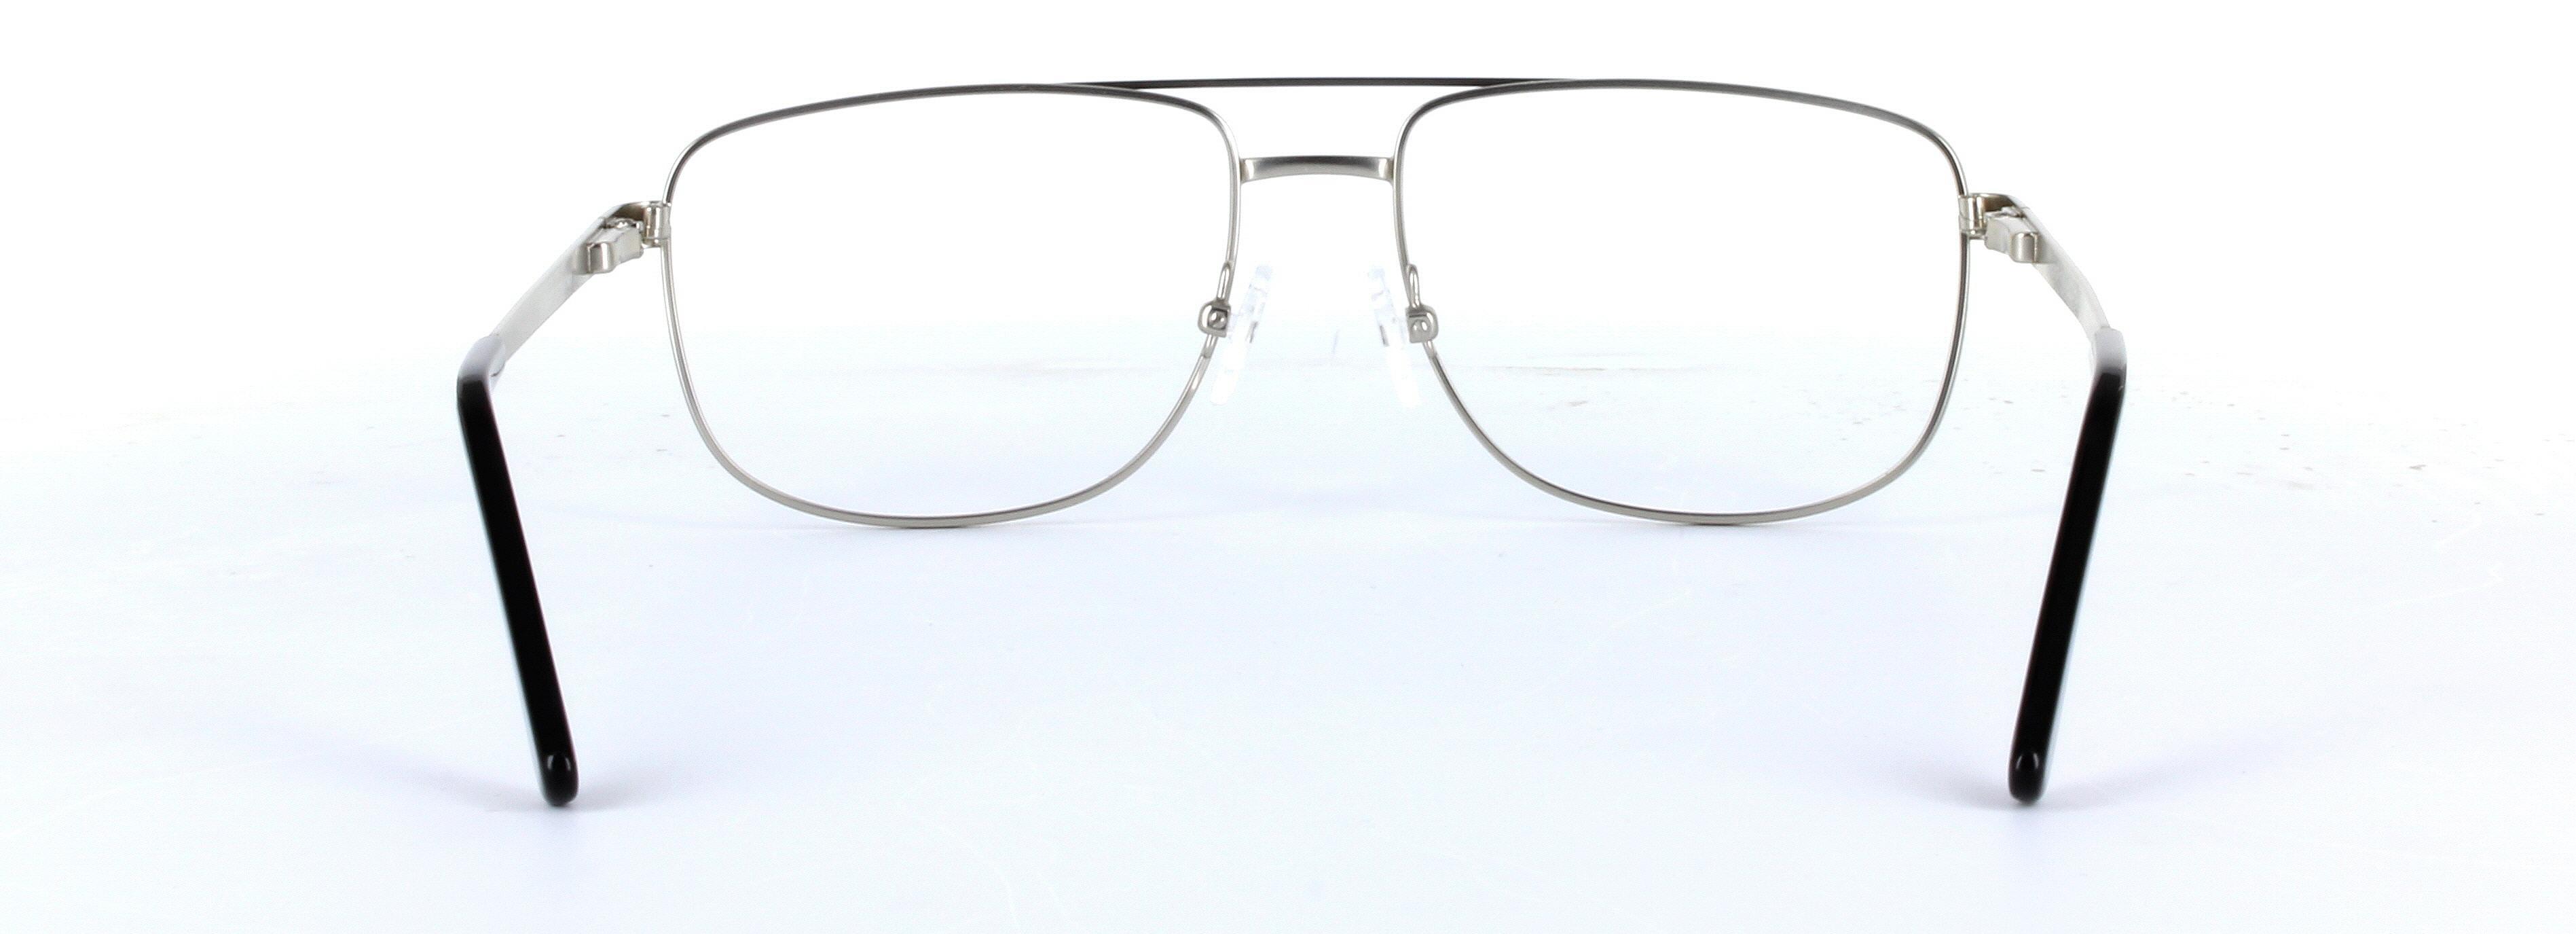 Marlowe Silver Full Rim Oval Metal Glasses - Image View 3